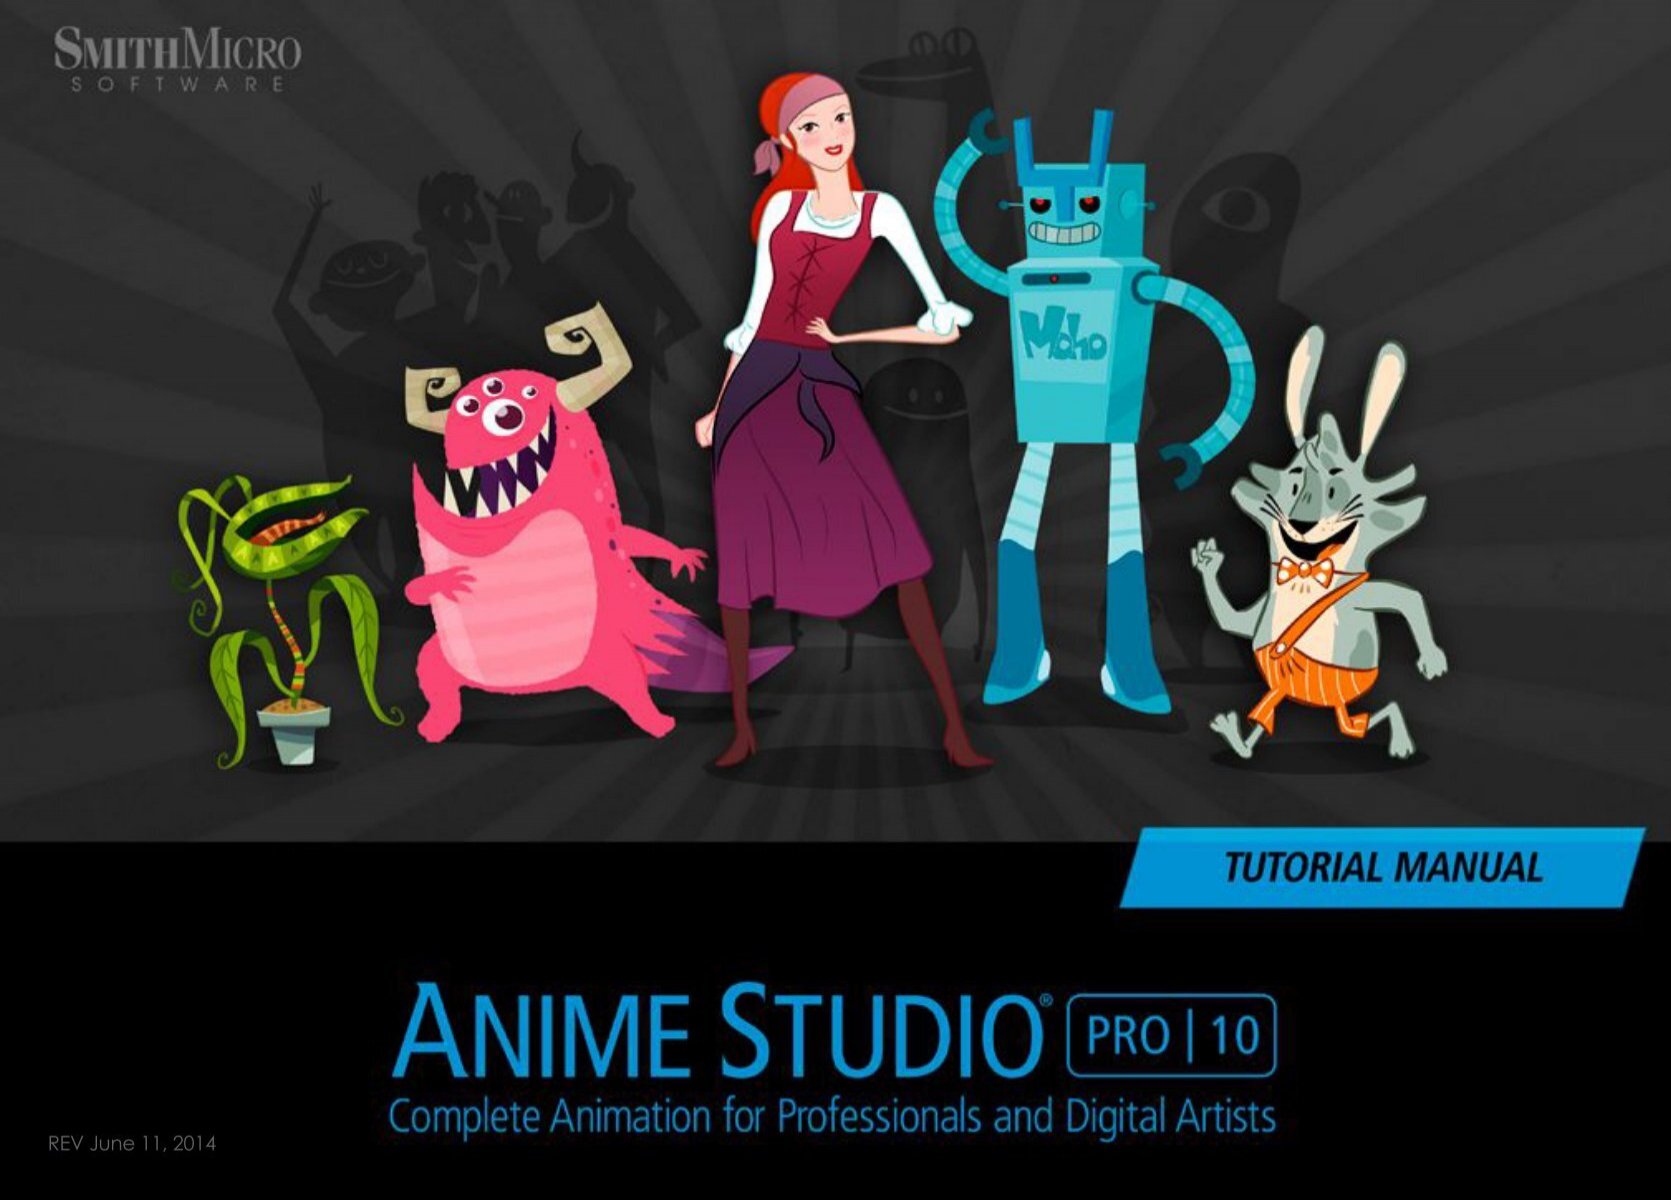 Smith Micro unveils upgrades for Anime Studio animation apps | Macworld